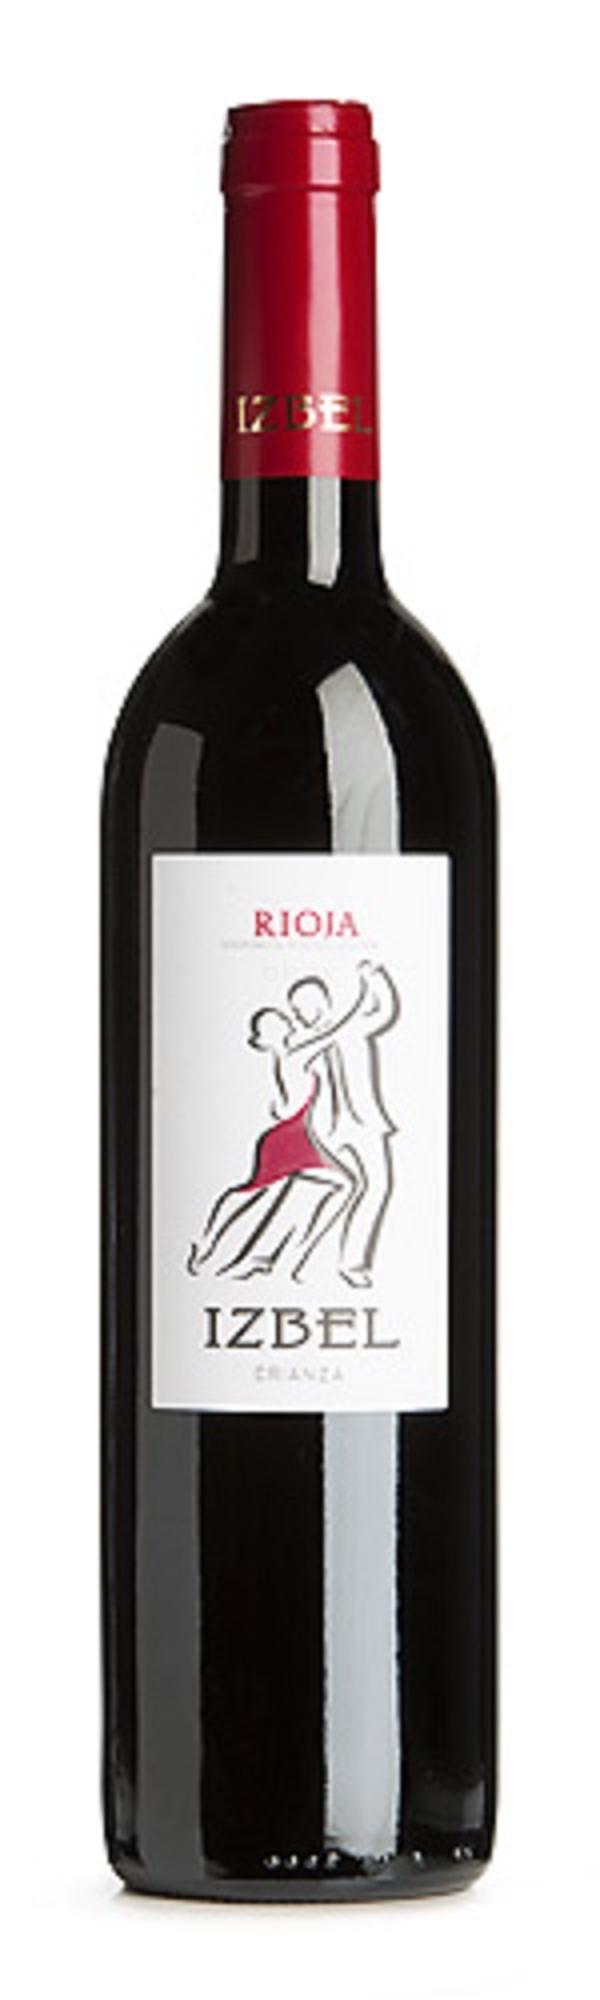 Produktfoto zu Rioja Crianza rot, 0,75 l